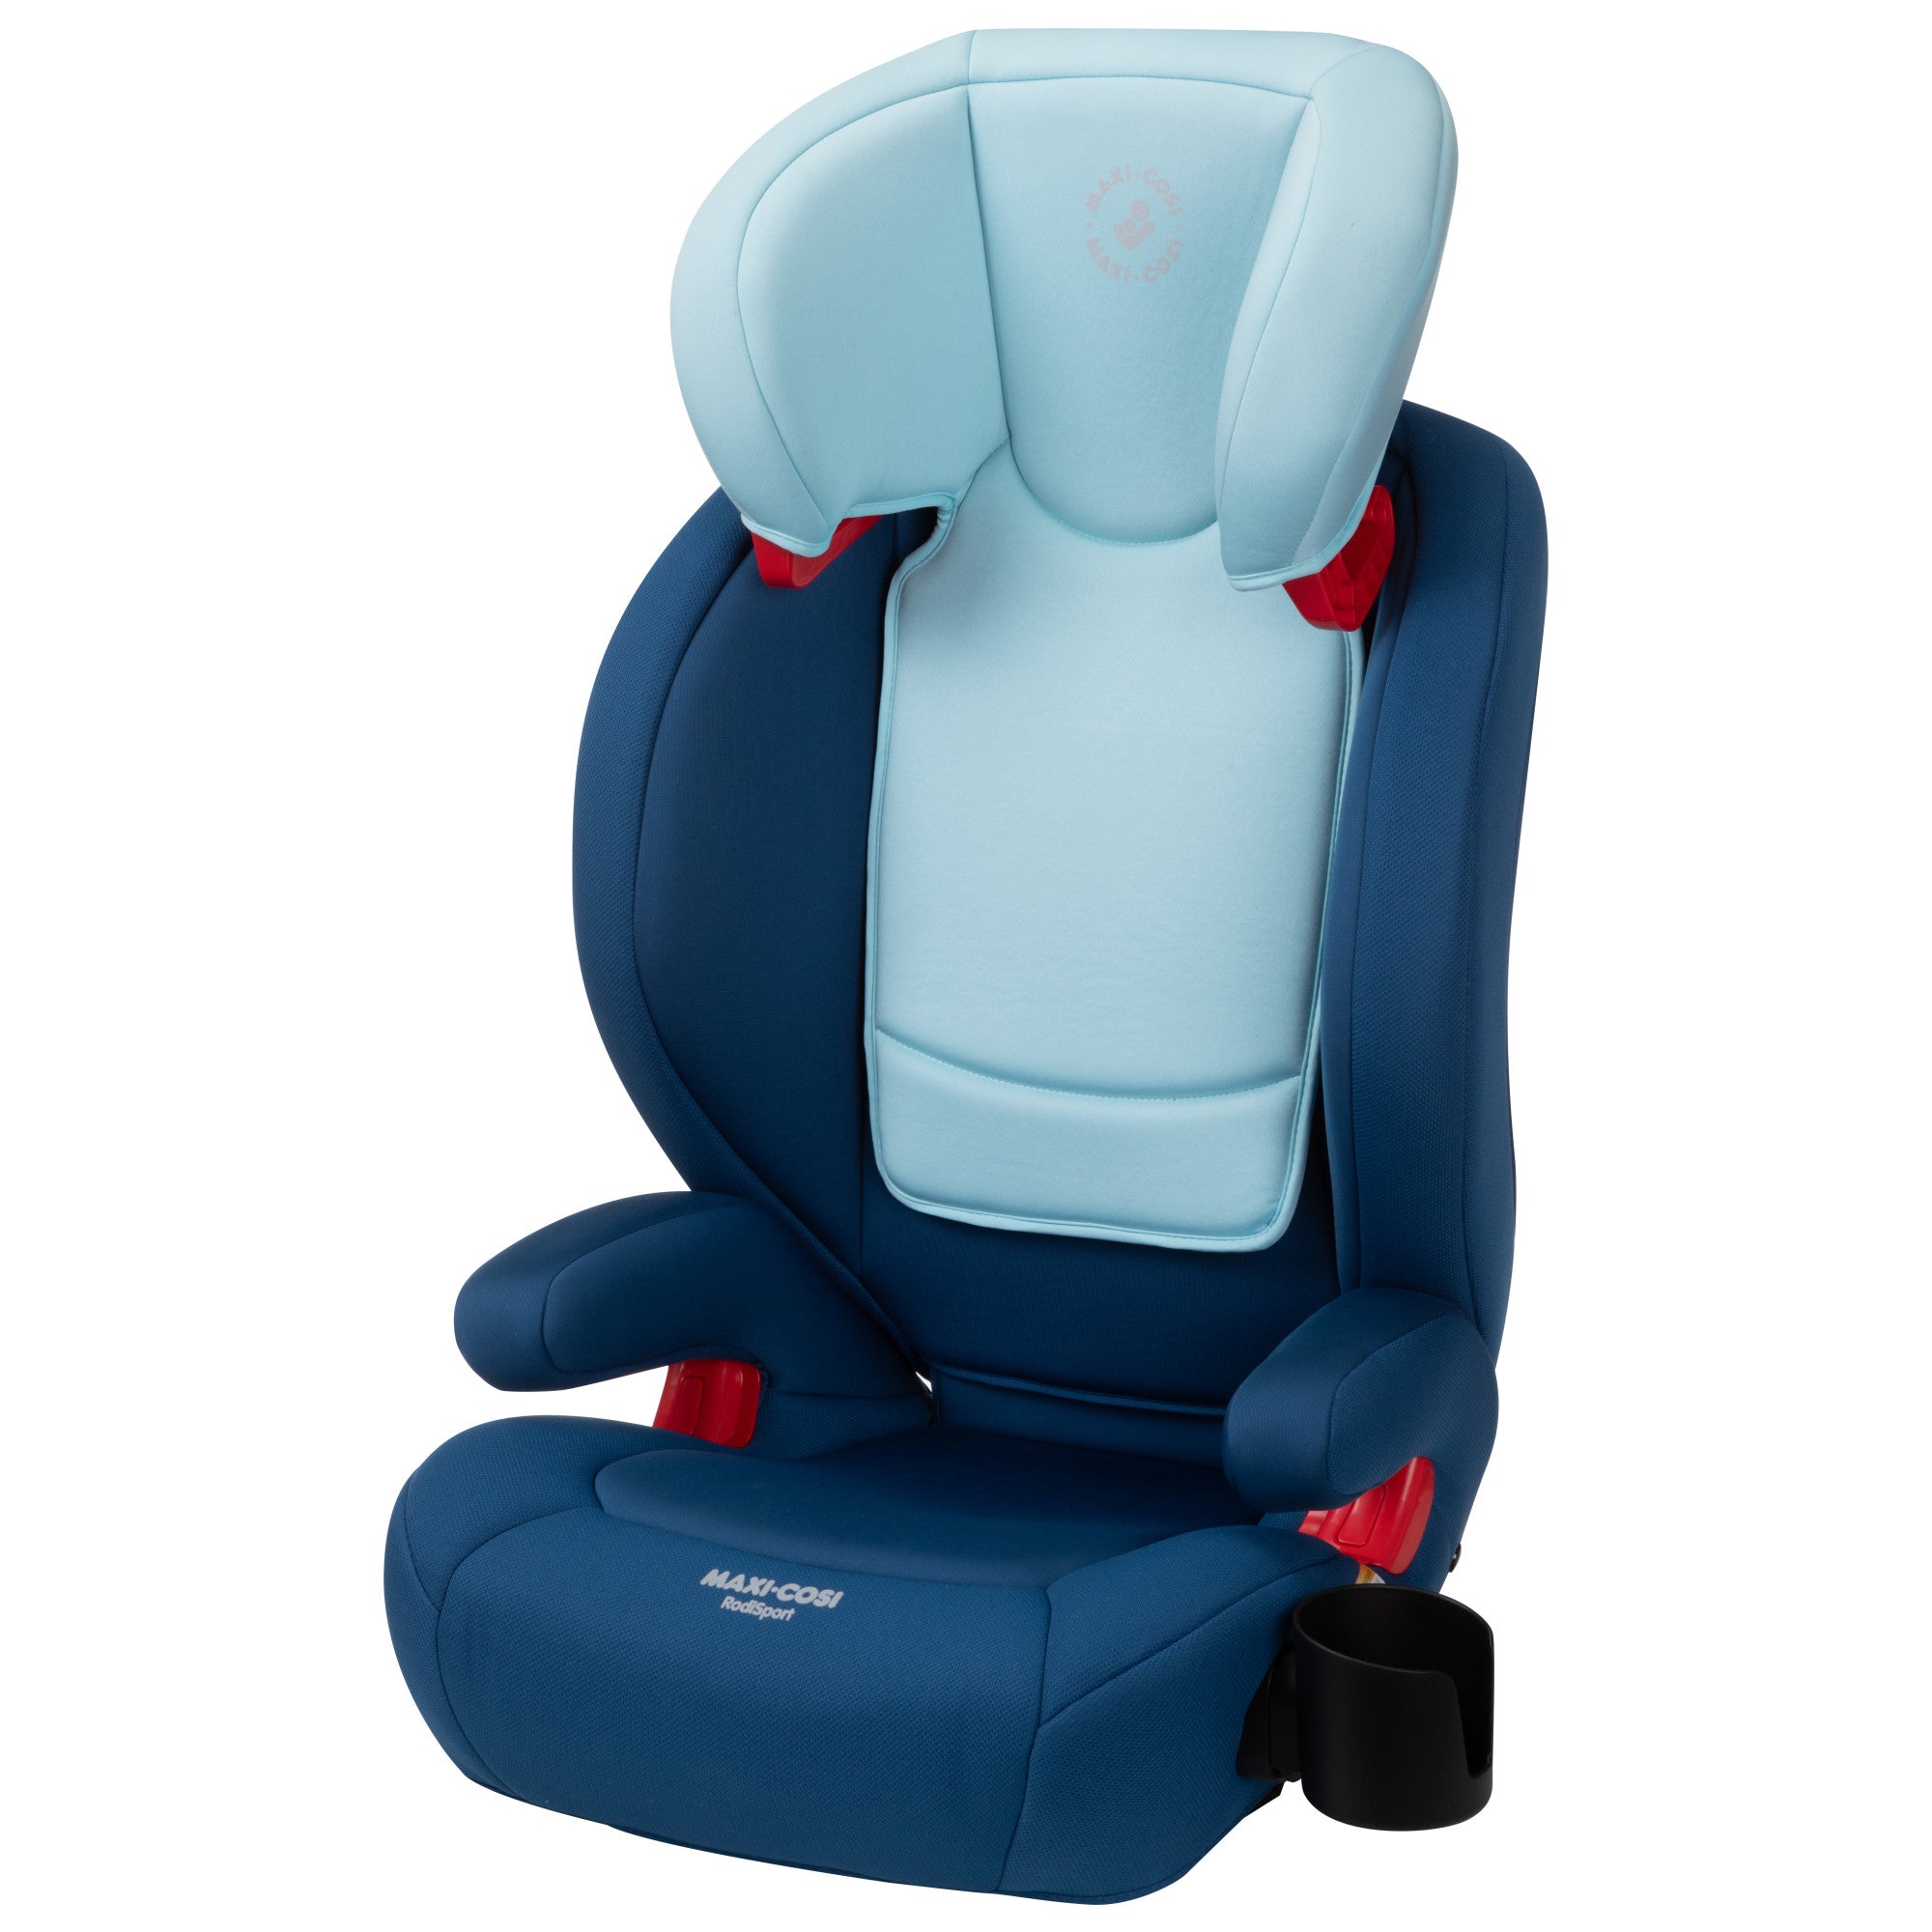 Maxi-Cosi RodiSport blue car seat front view